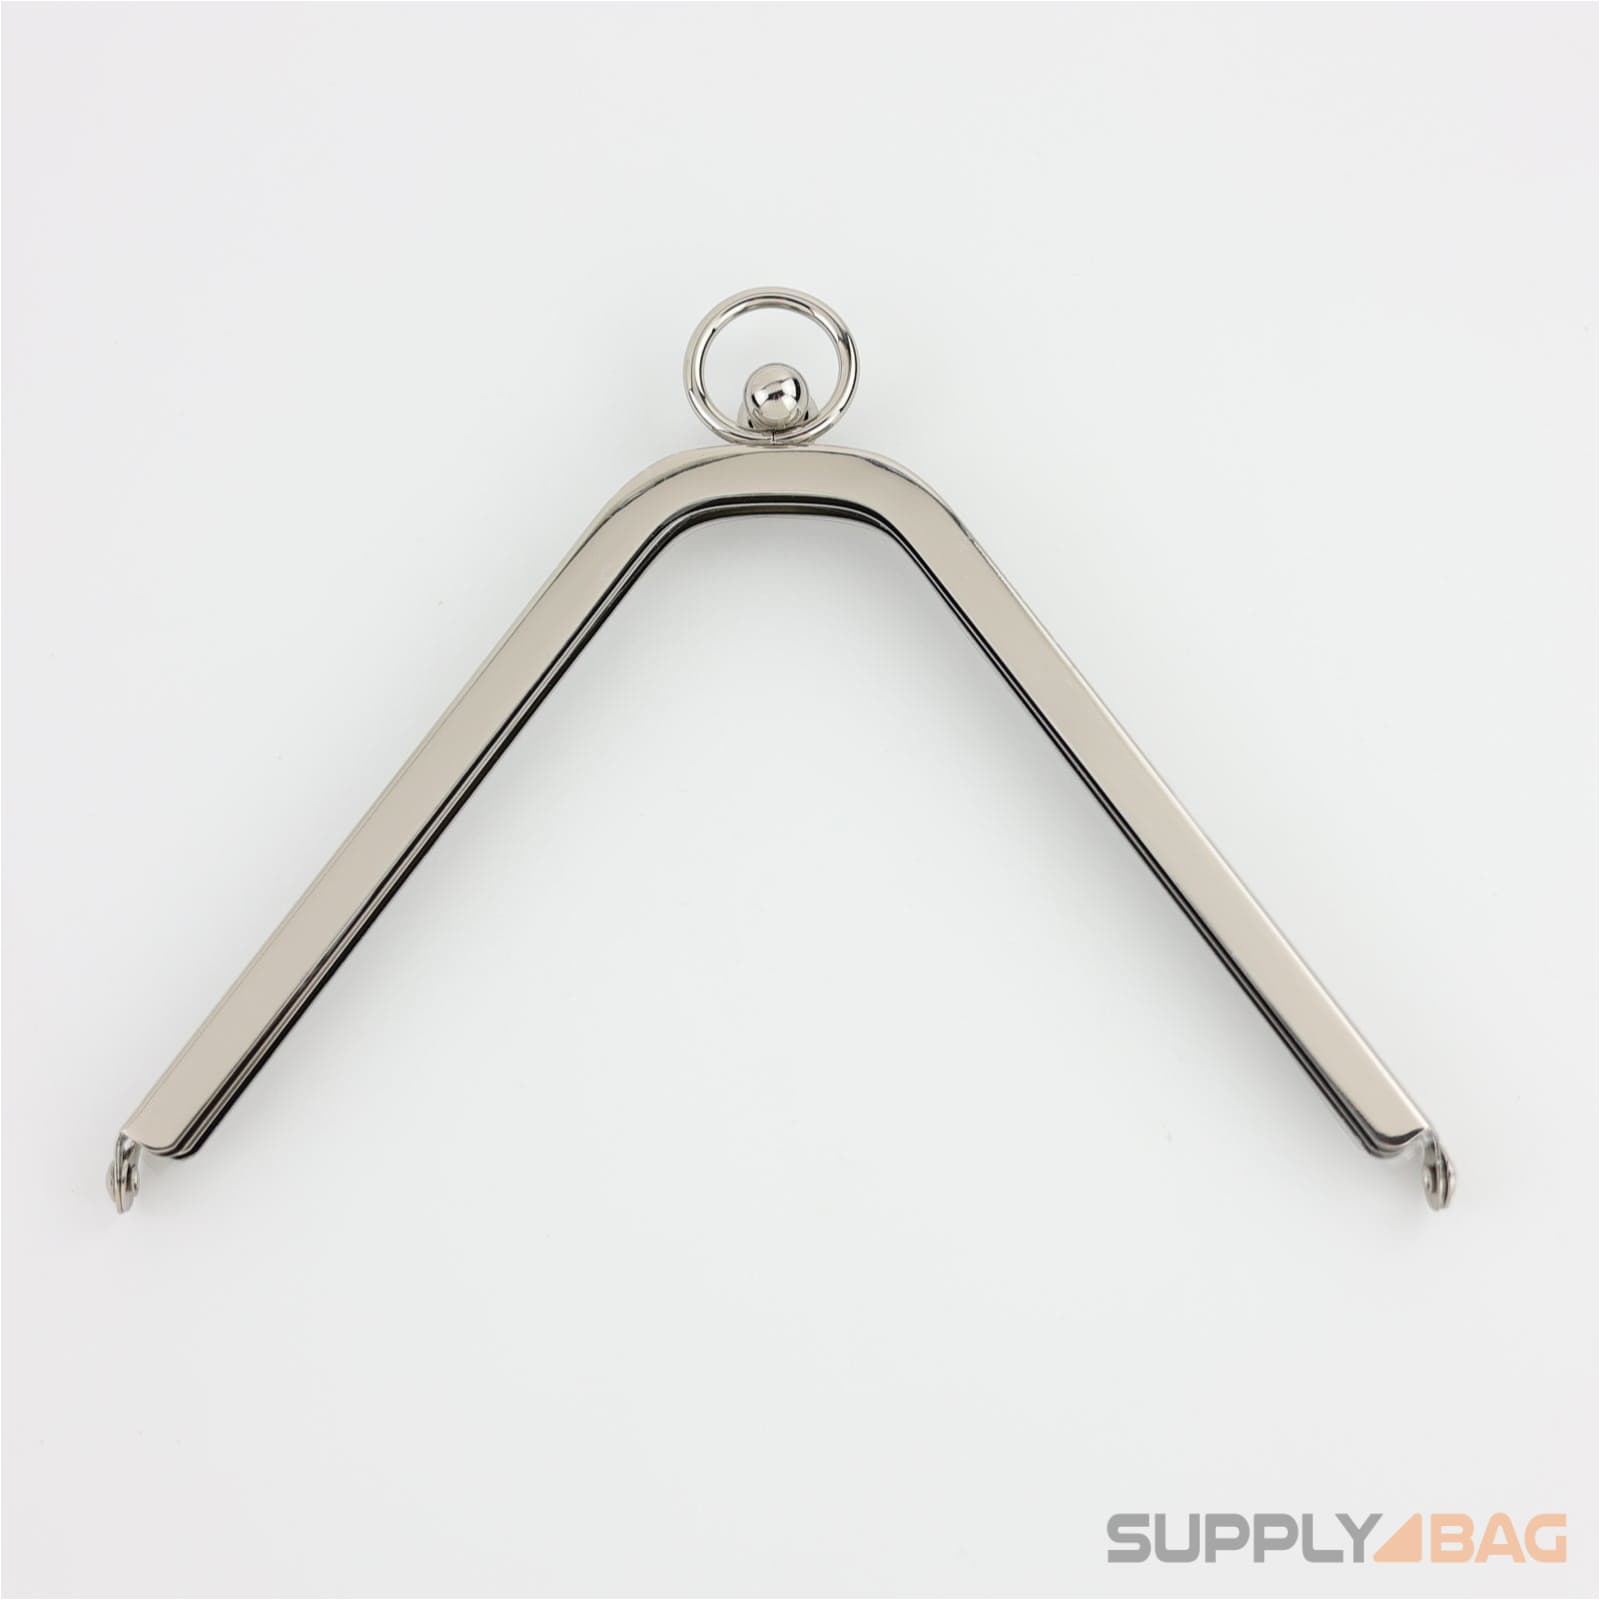 7 1/4 x 4 1/4 inch - O Ring Clasp - Silver Metal Purse Frame